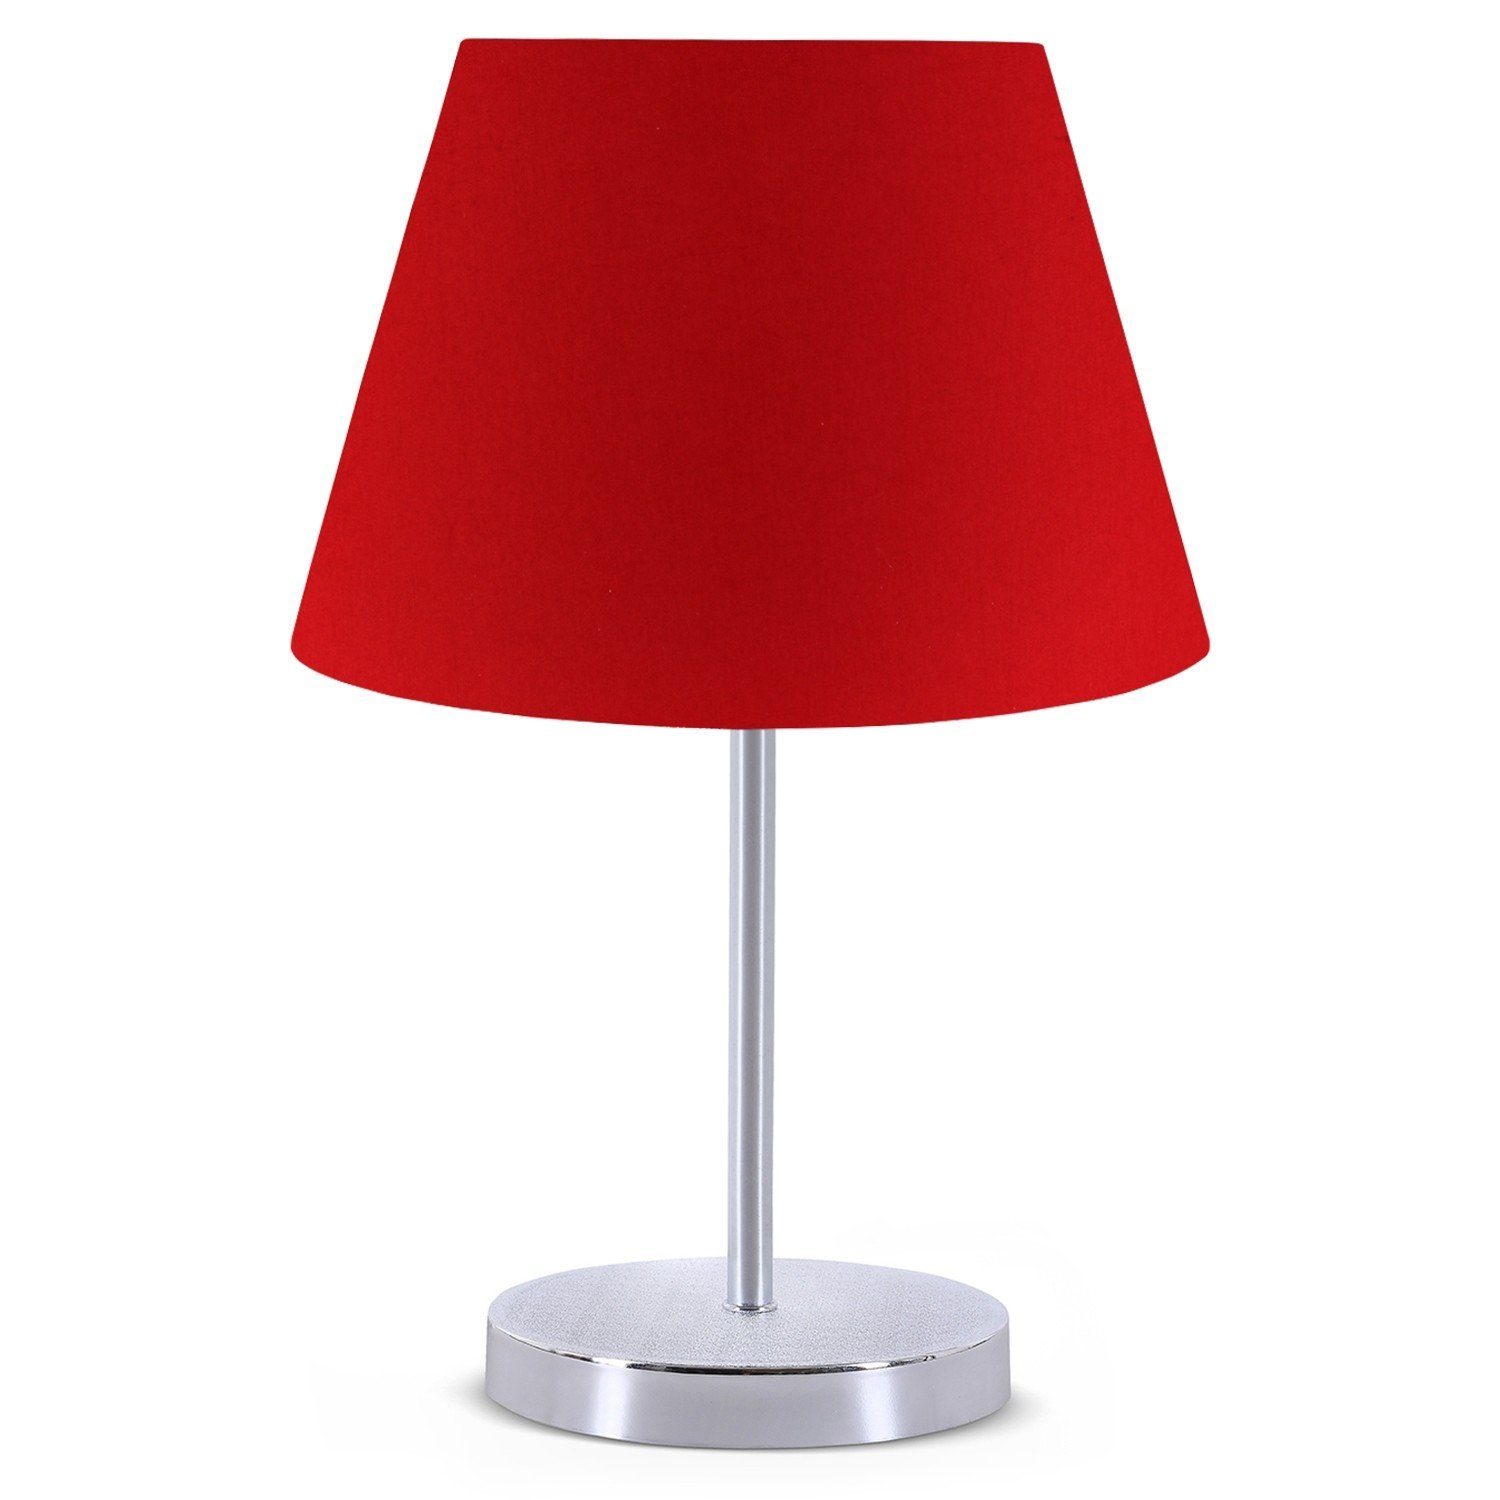 PVC 100% Nachttischlampe Opviq rot, AYD SGN, Nachttischlampen,